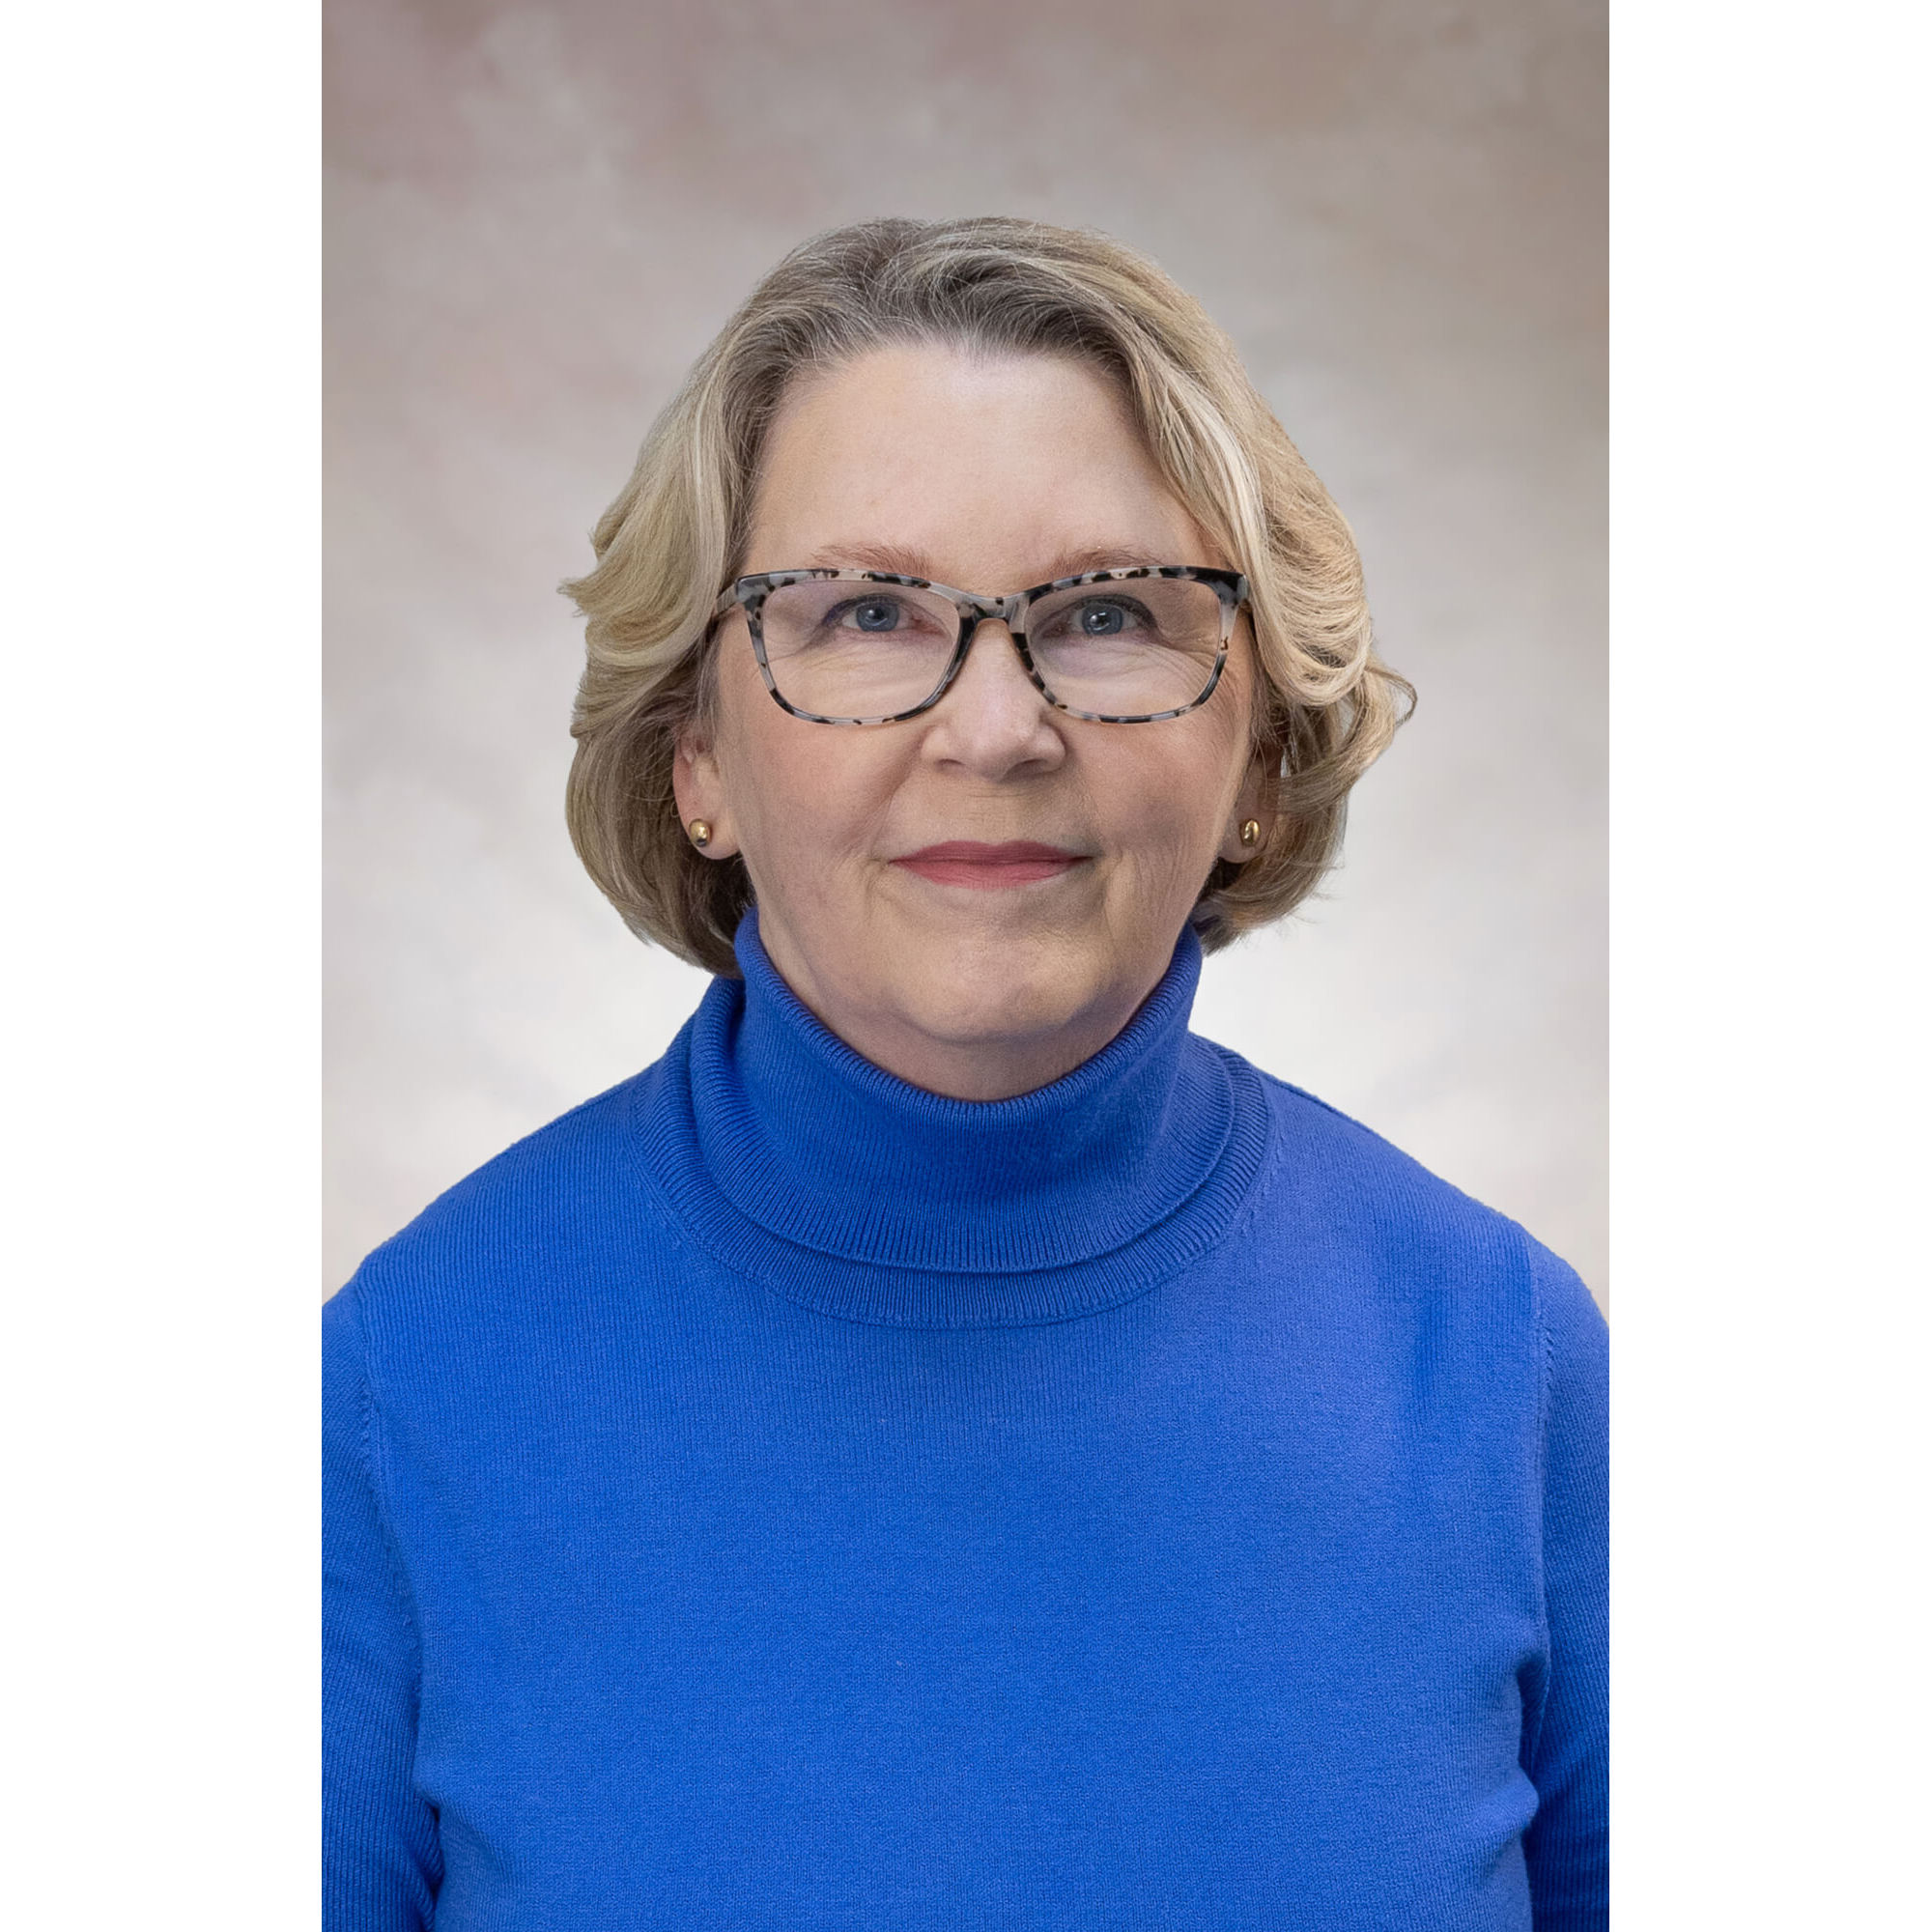 Dr. Diane M. Mater, DO - East Lansing, MI - Family Medicine